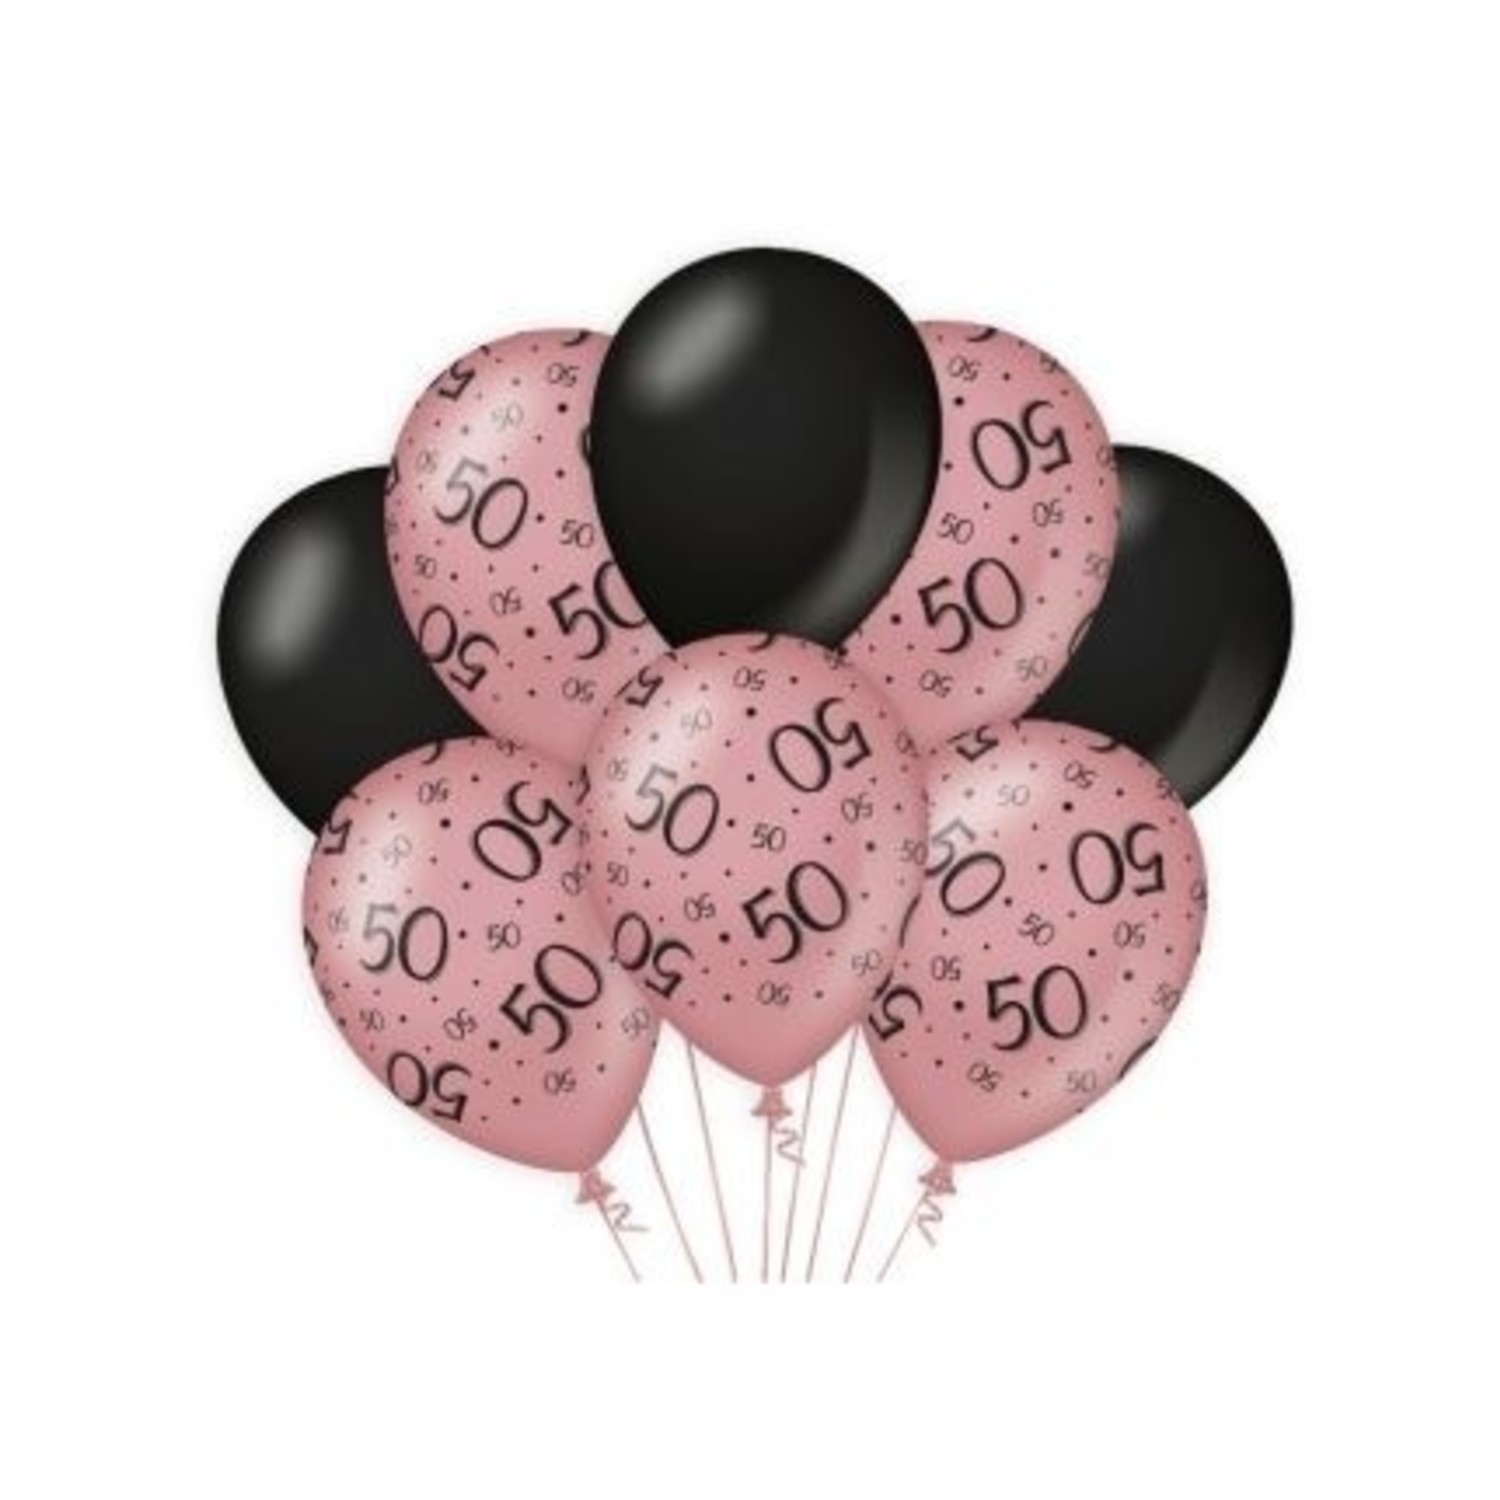 Acheter des ballons 50 ans rose or / noir?